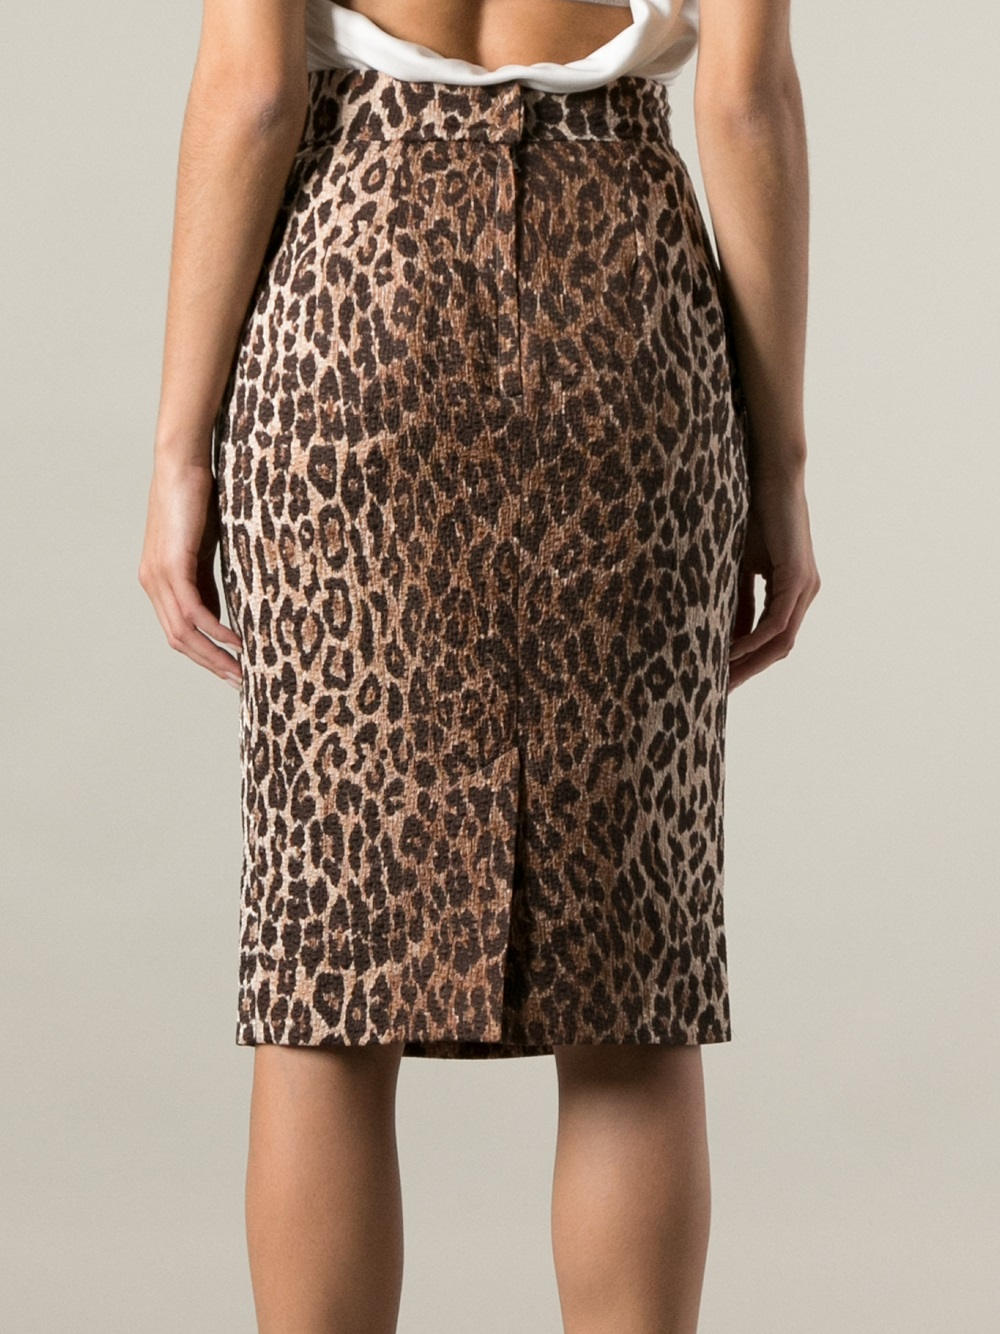 Dolce & gabbana Leopard Print Pencil Skirt | Lyst